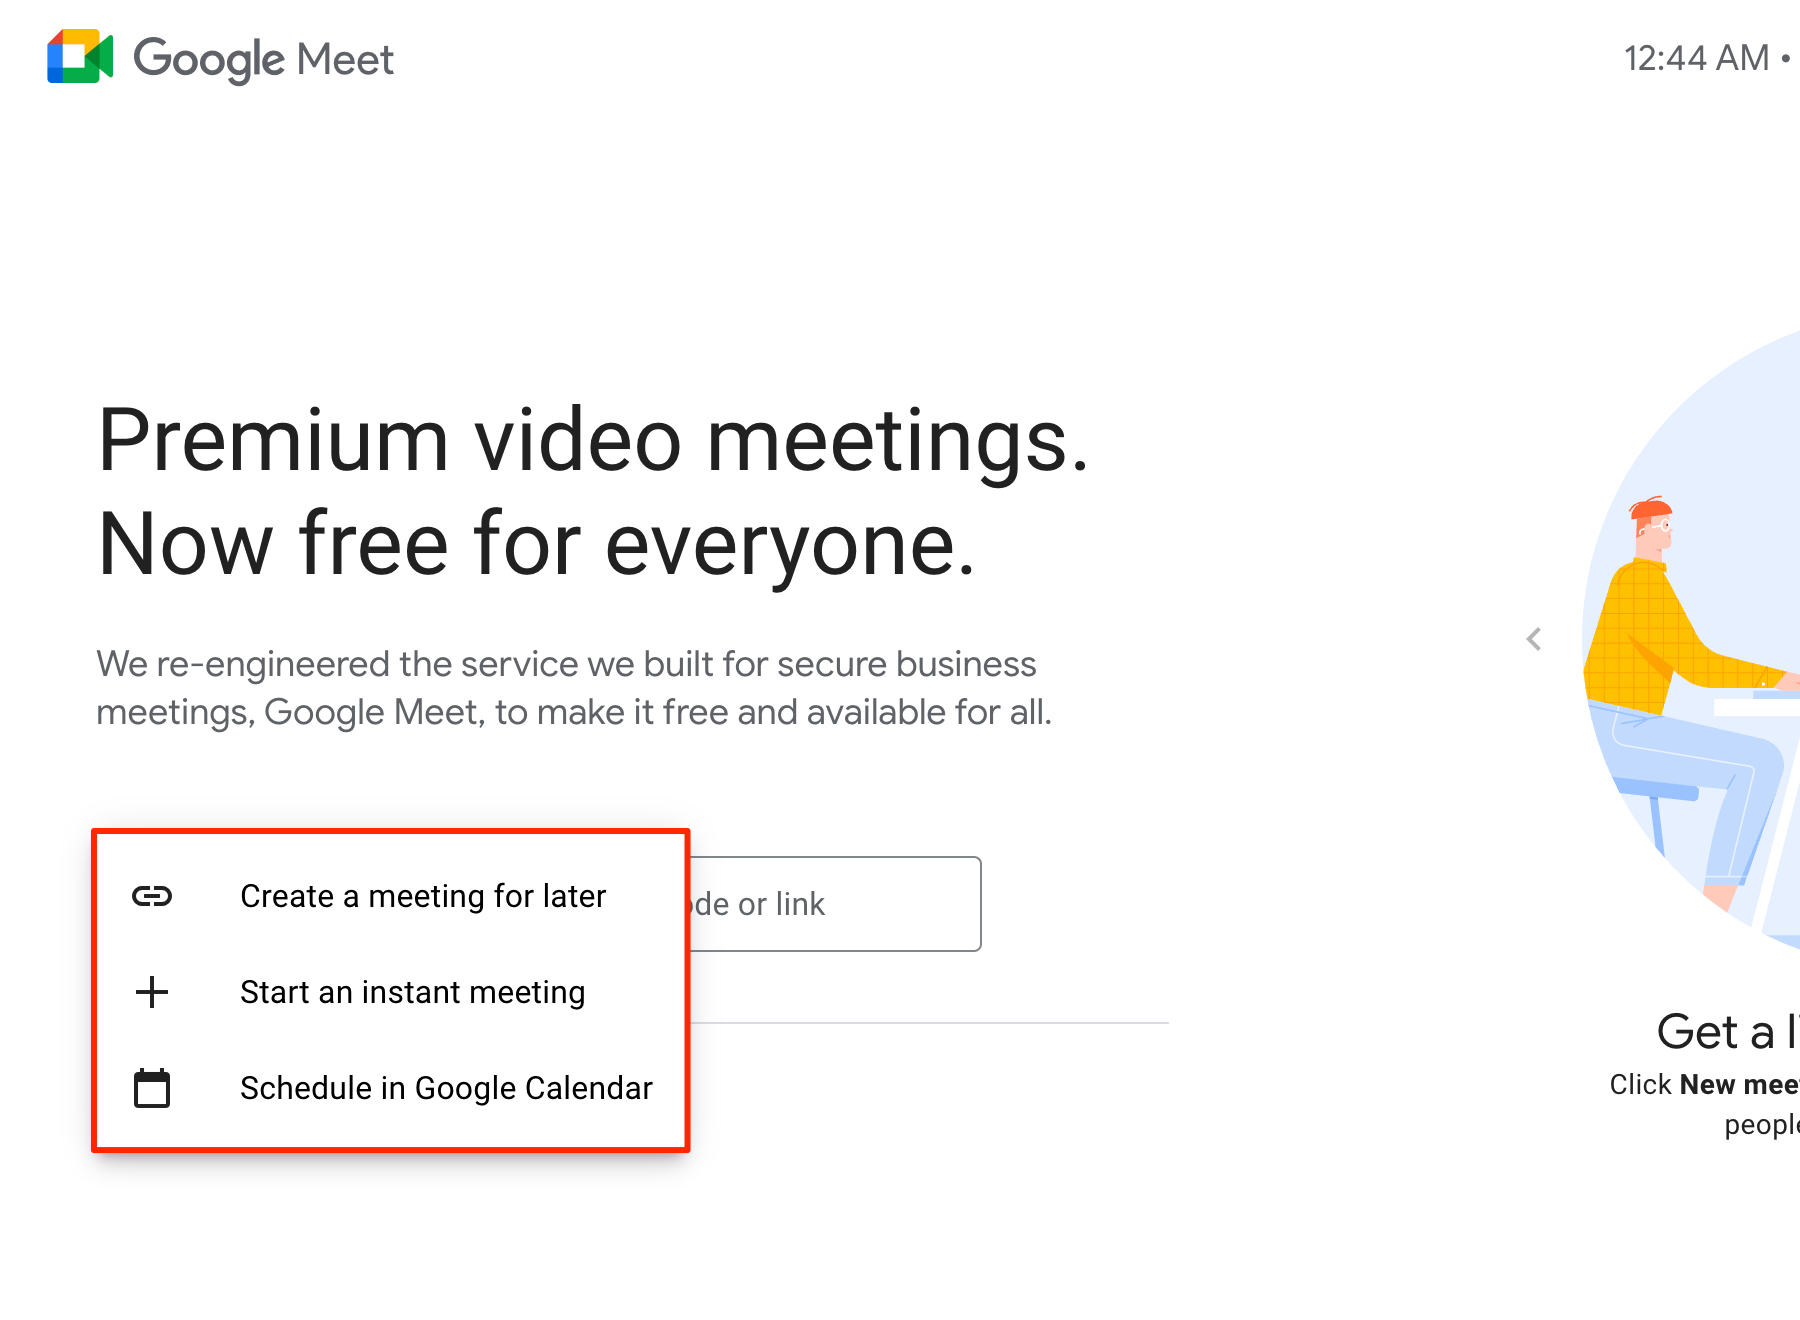 memulai rapat instan di Google Meet